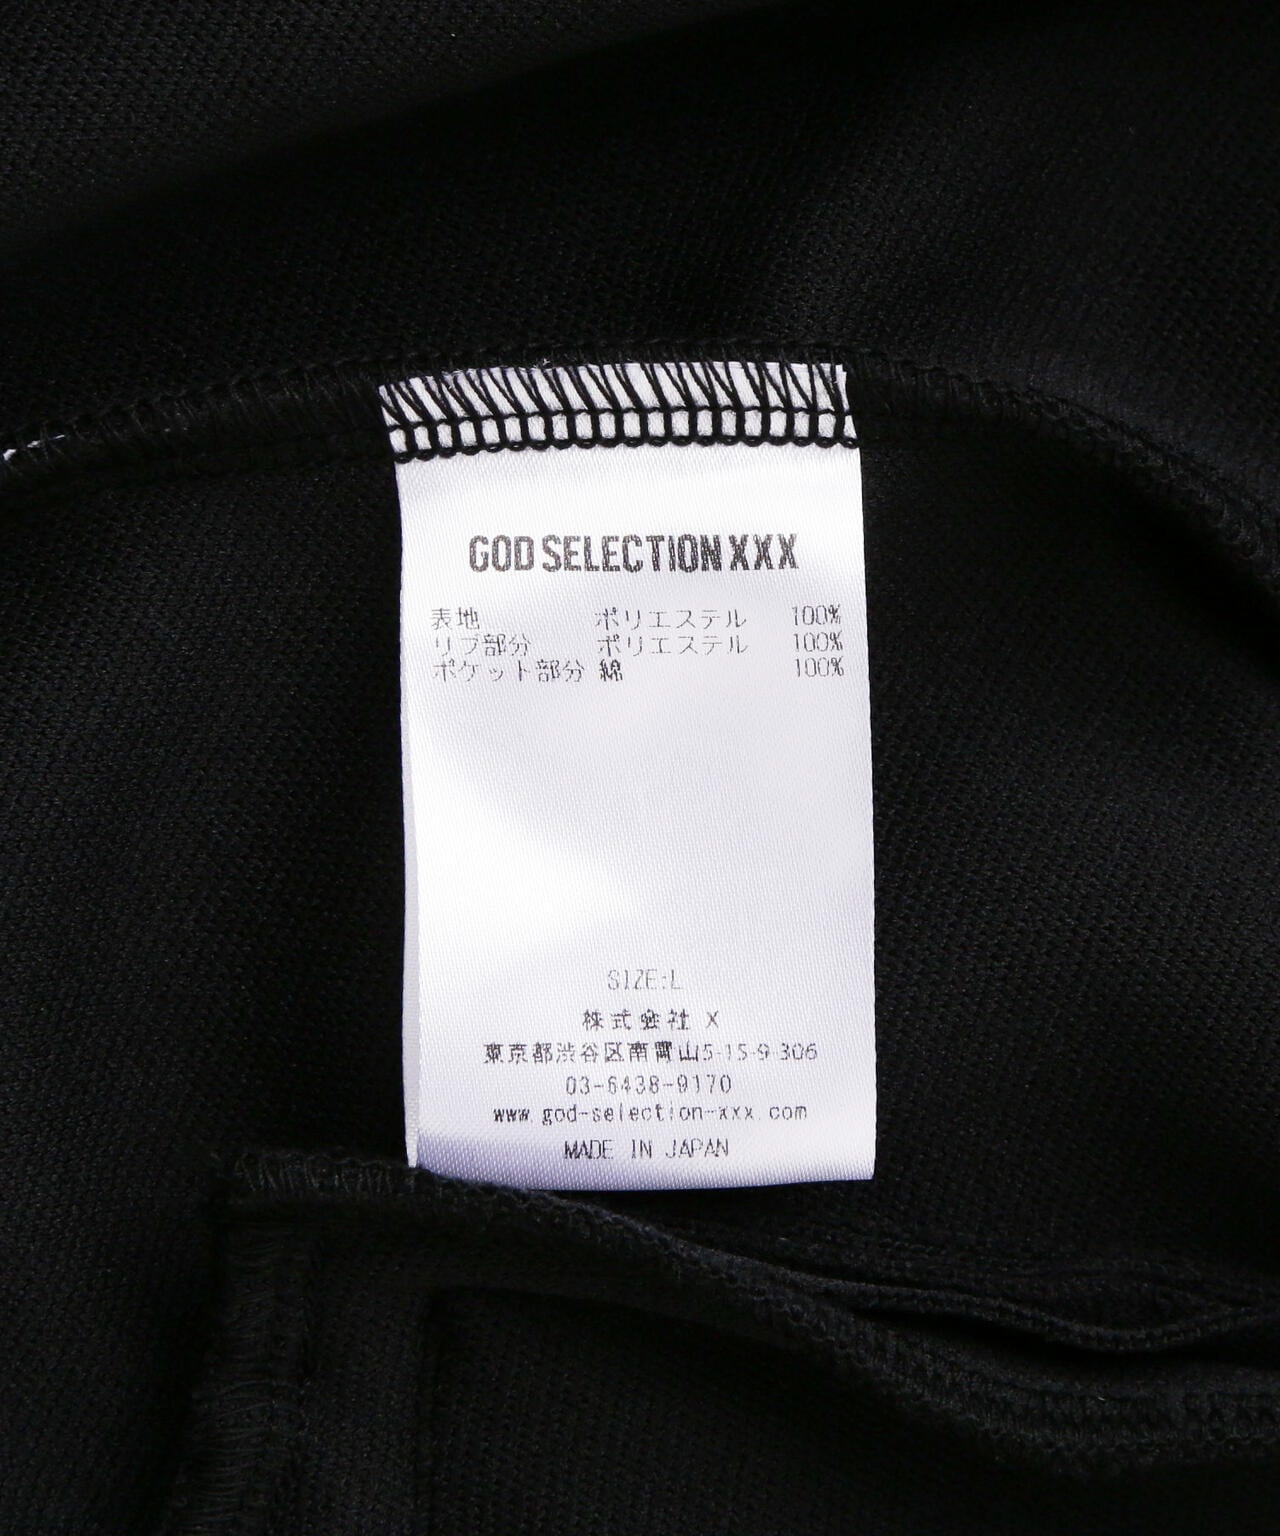 GOD SELECTION XXX / GX-S24-JK-01トラックJKT | B'2nd ( ビーセカンド 